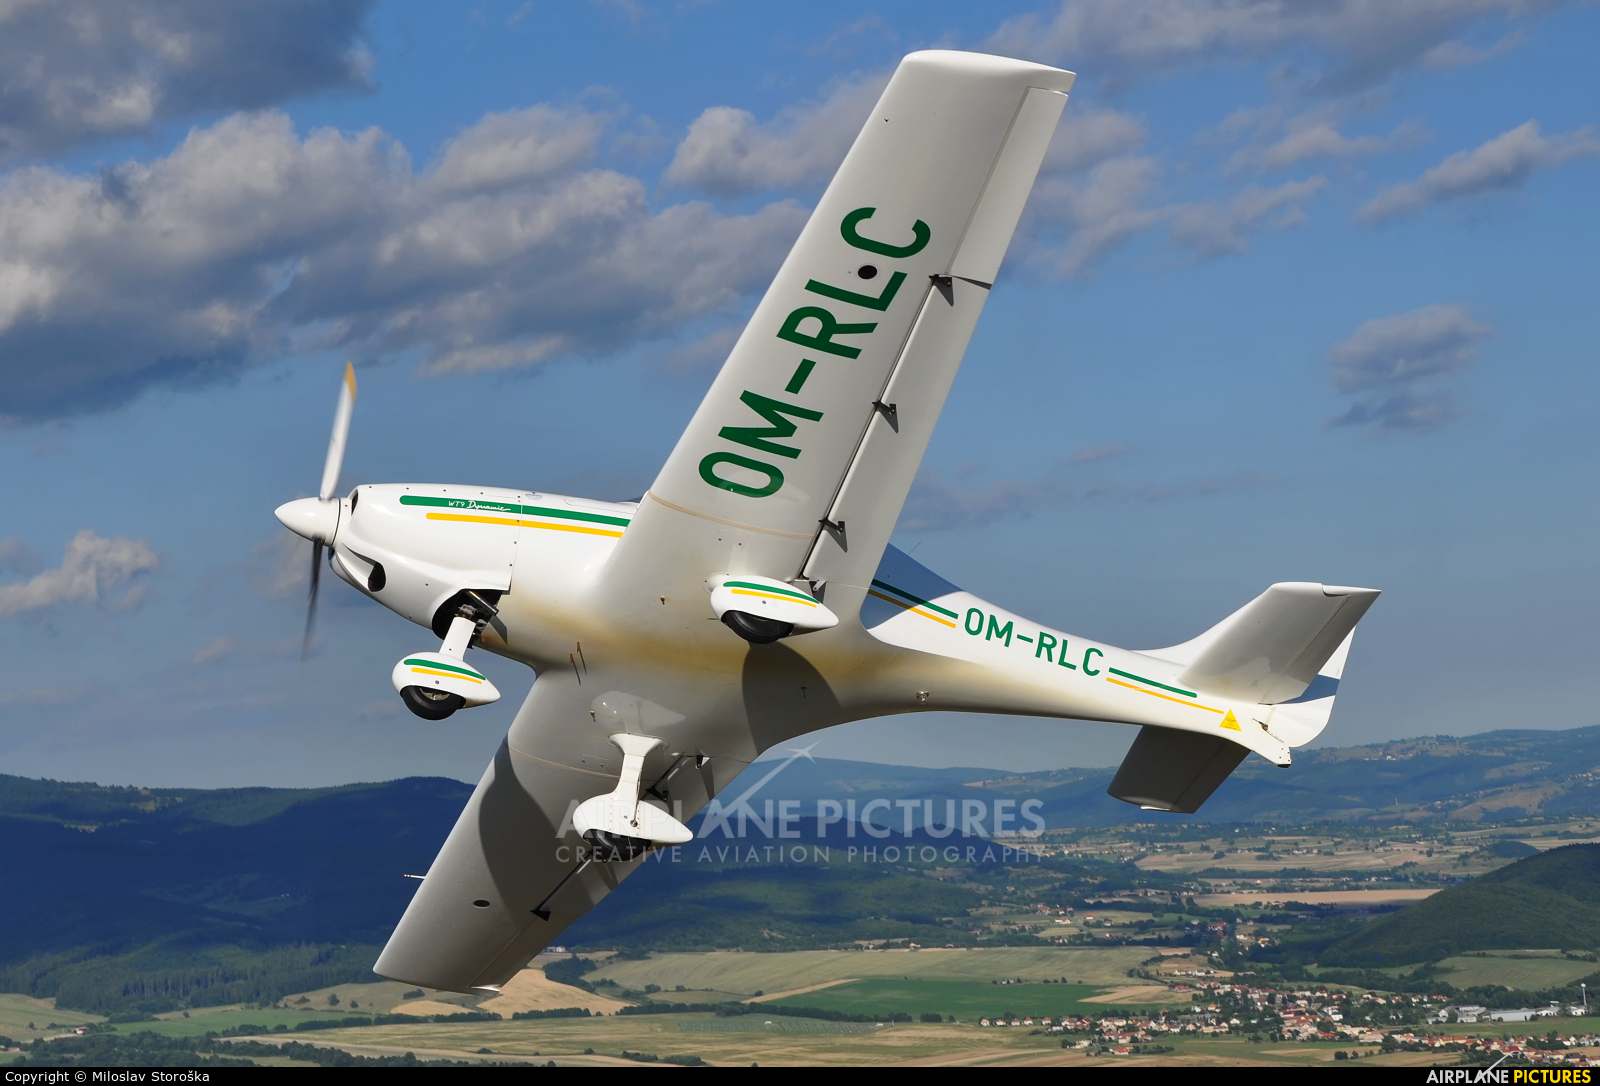 Slovensky Narodny Aeroklub OM-RLC aircraft at In Flight - Slovakia